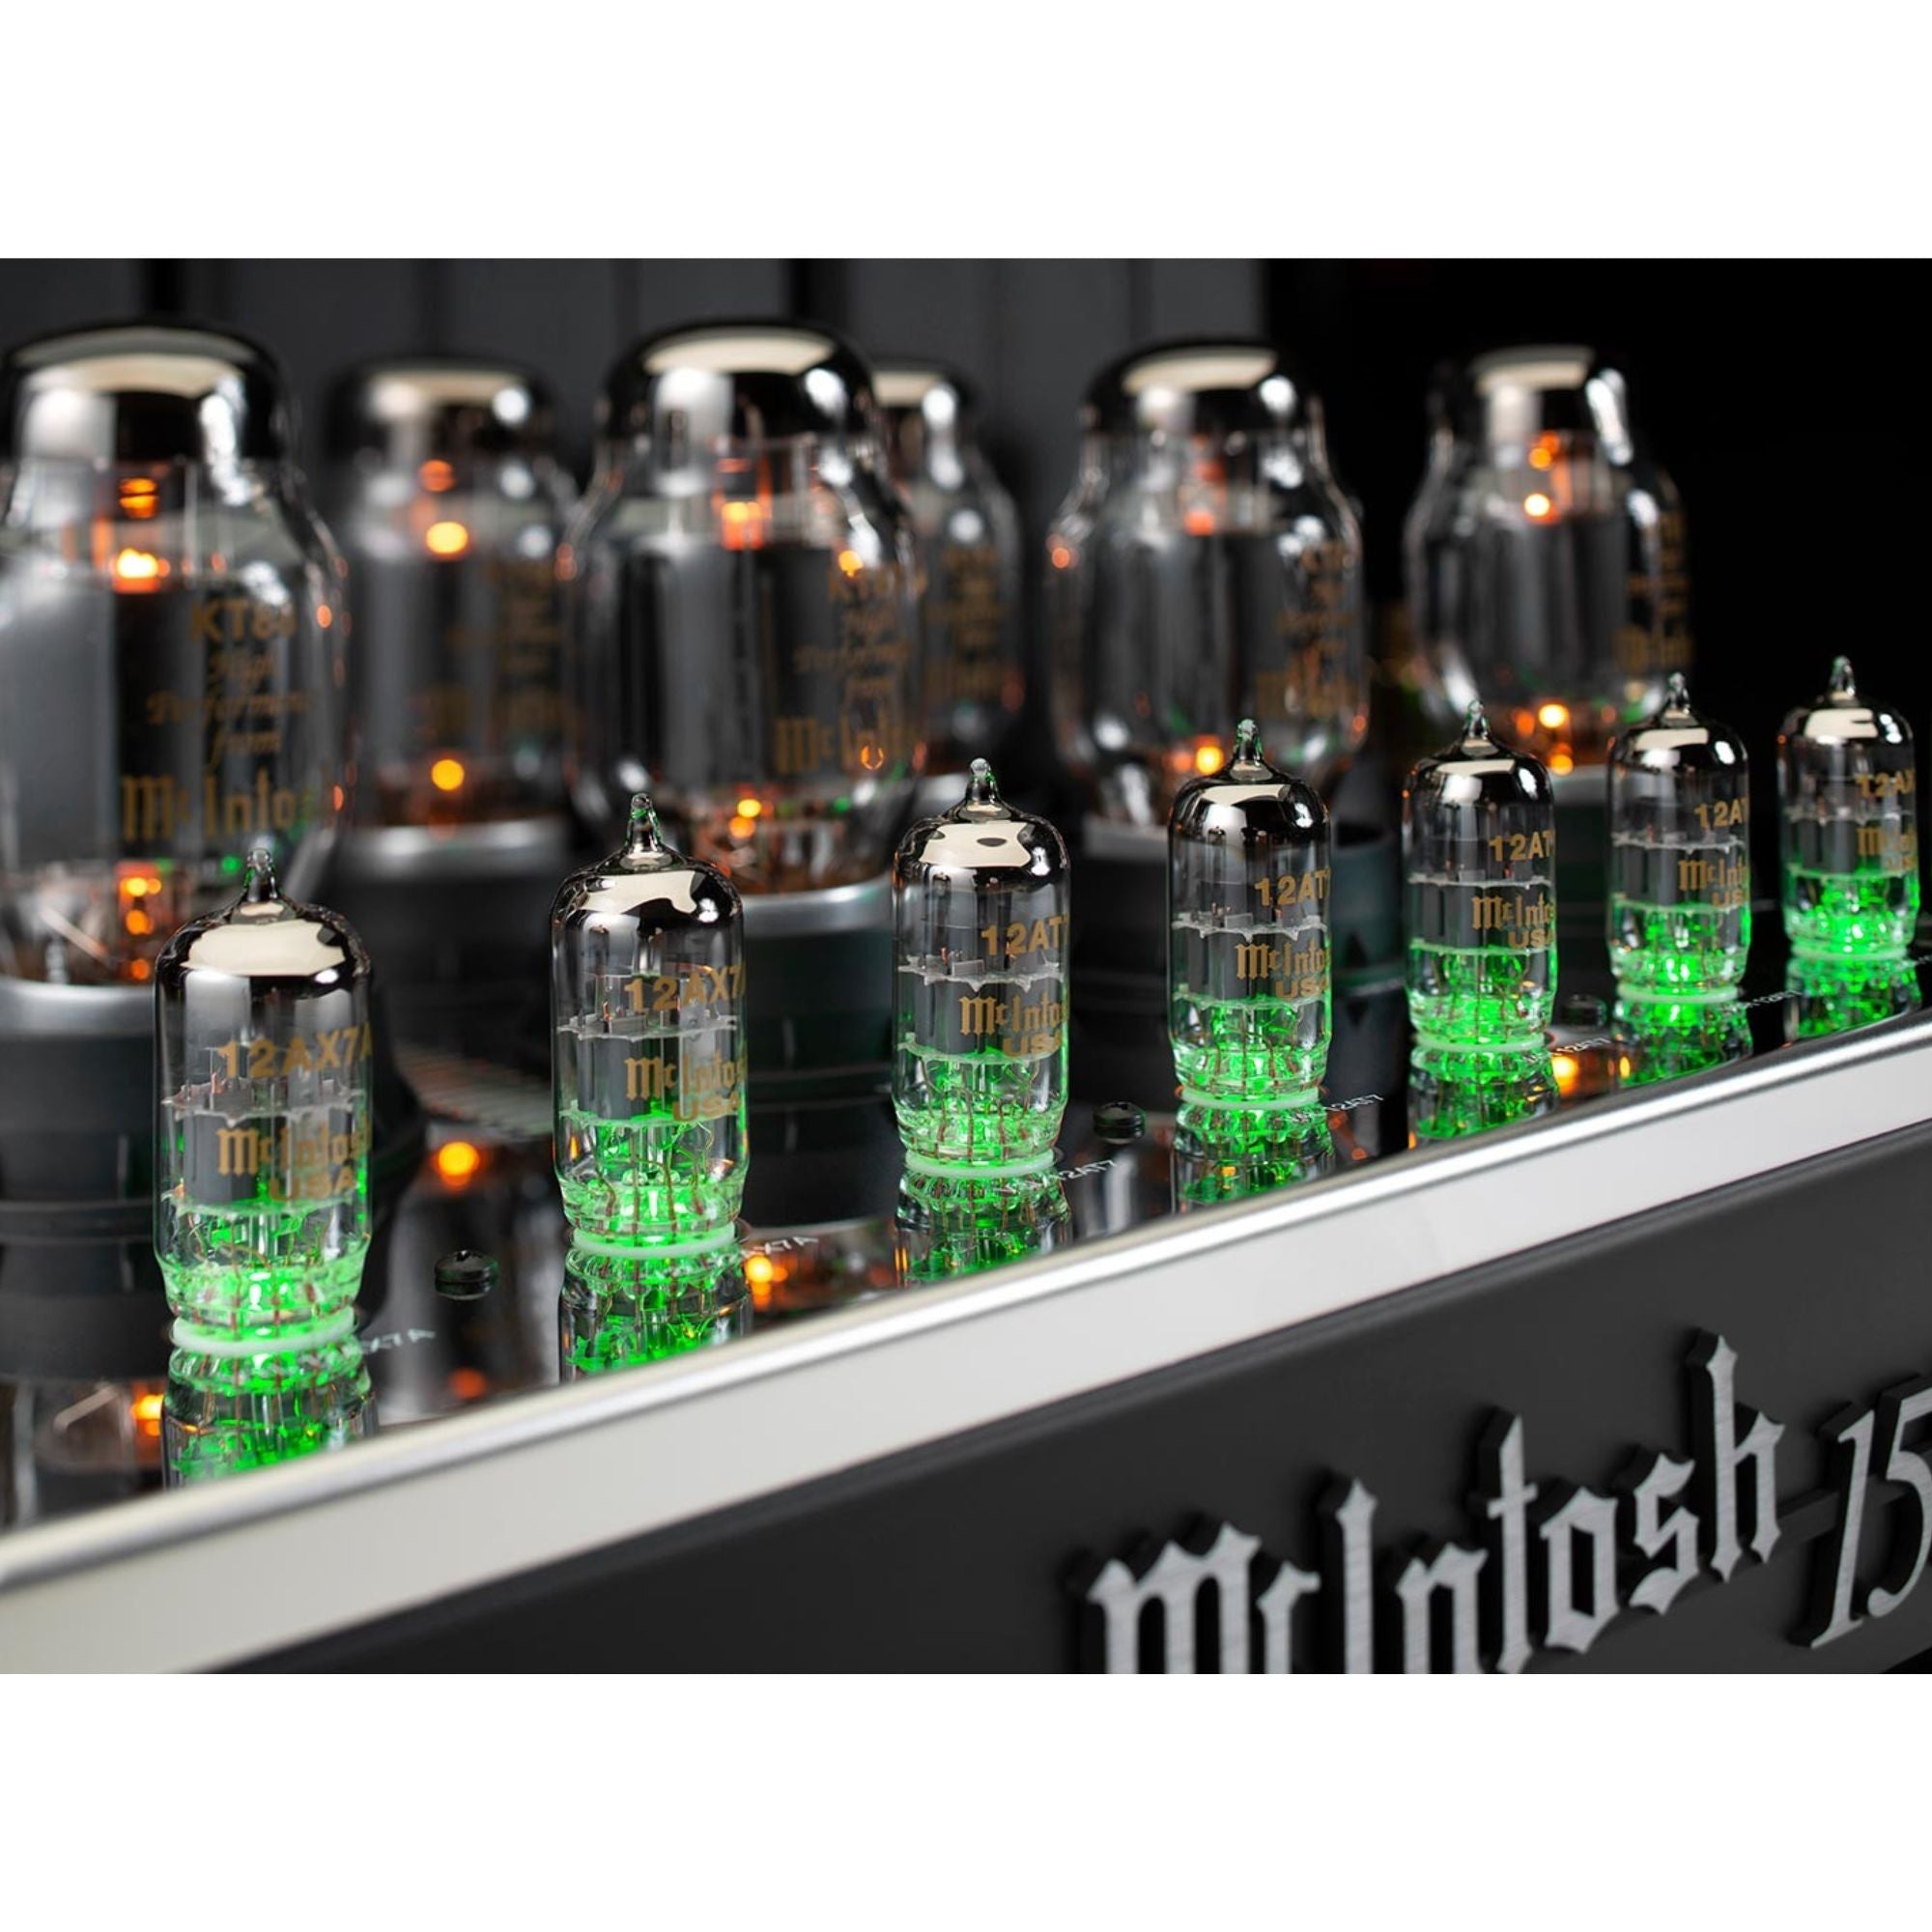 McIntosh Labs MC1502 - 2 Channel Vacuum Tube Power Amplifier - AVStore